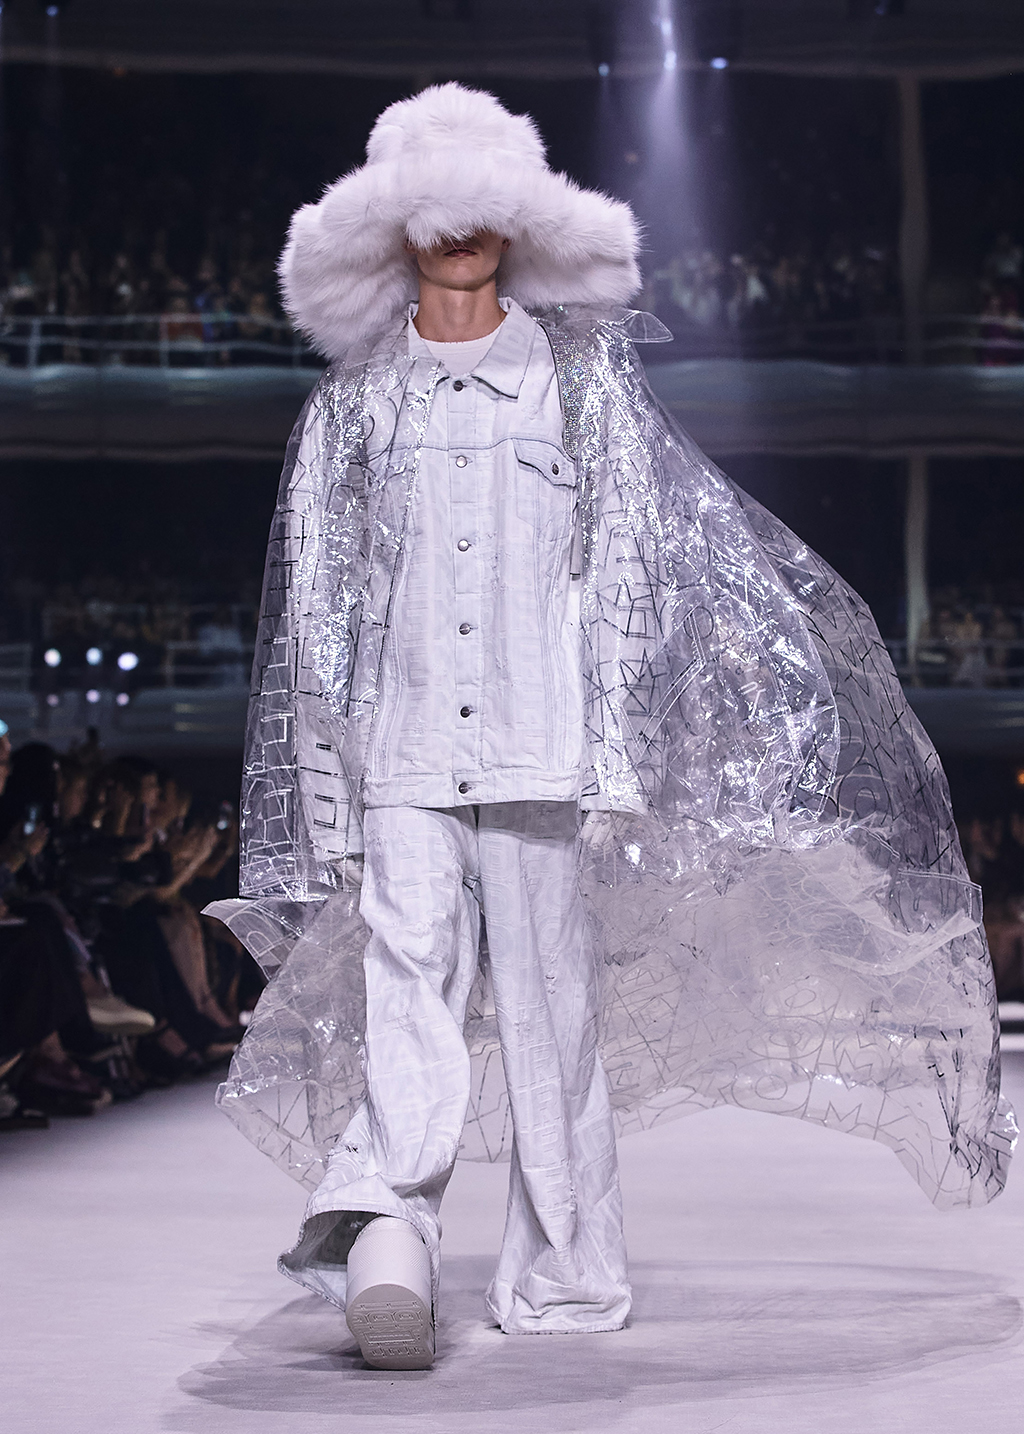 Fendi kicks off New York Fashion Week by celebrating the Baguette